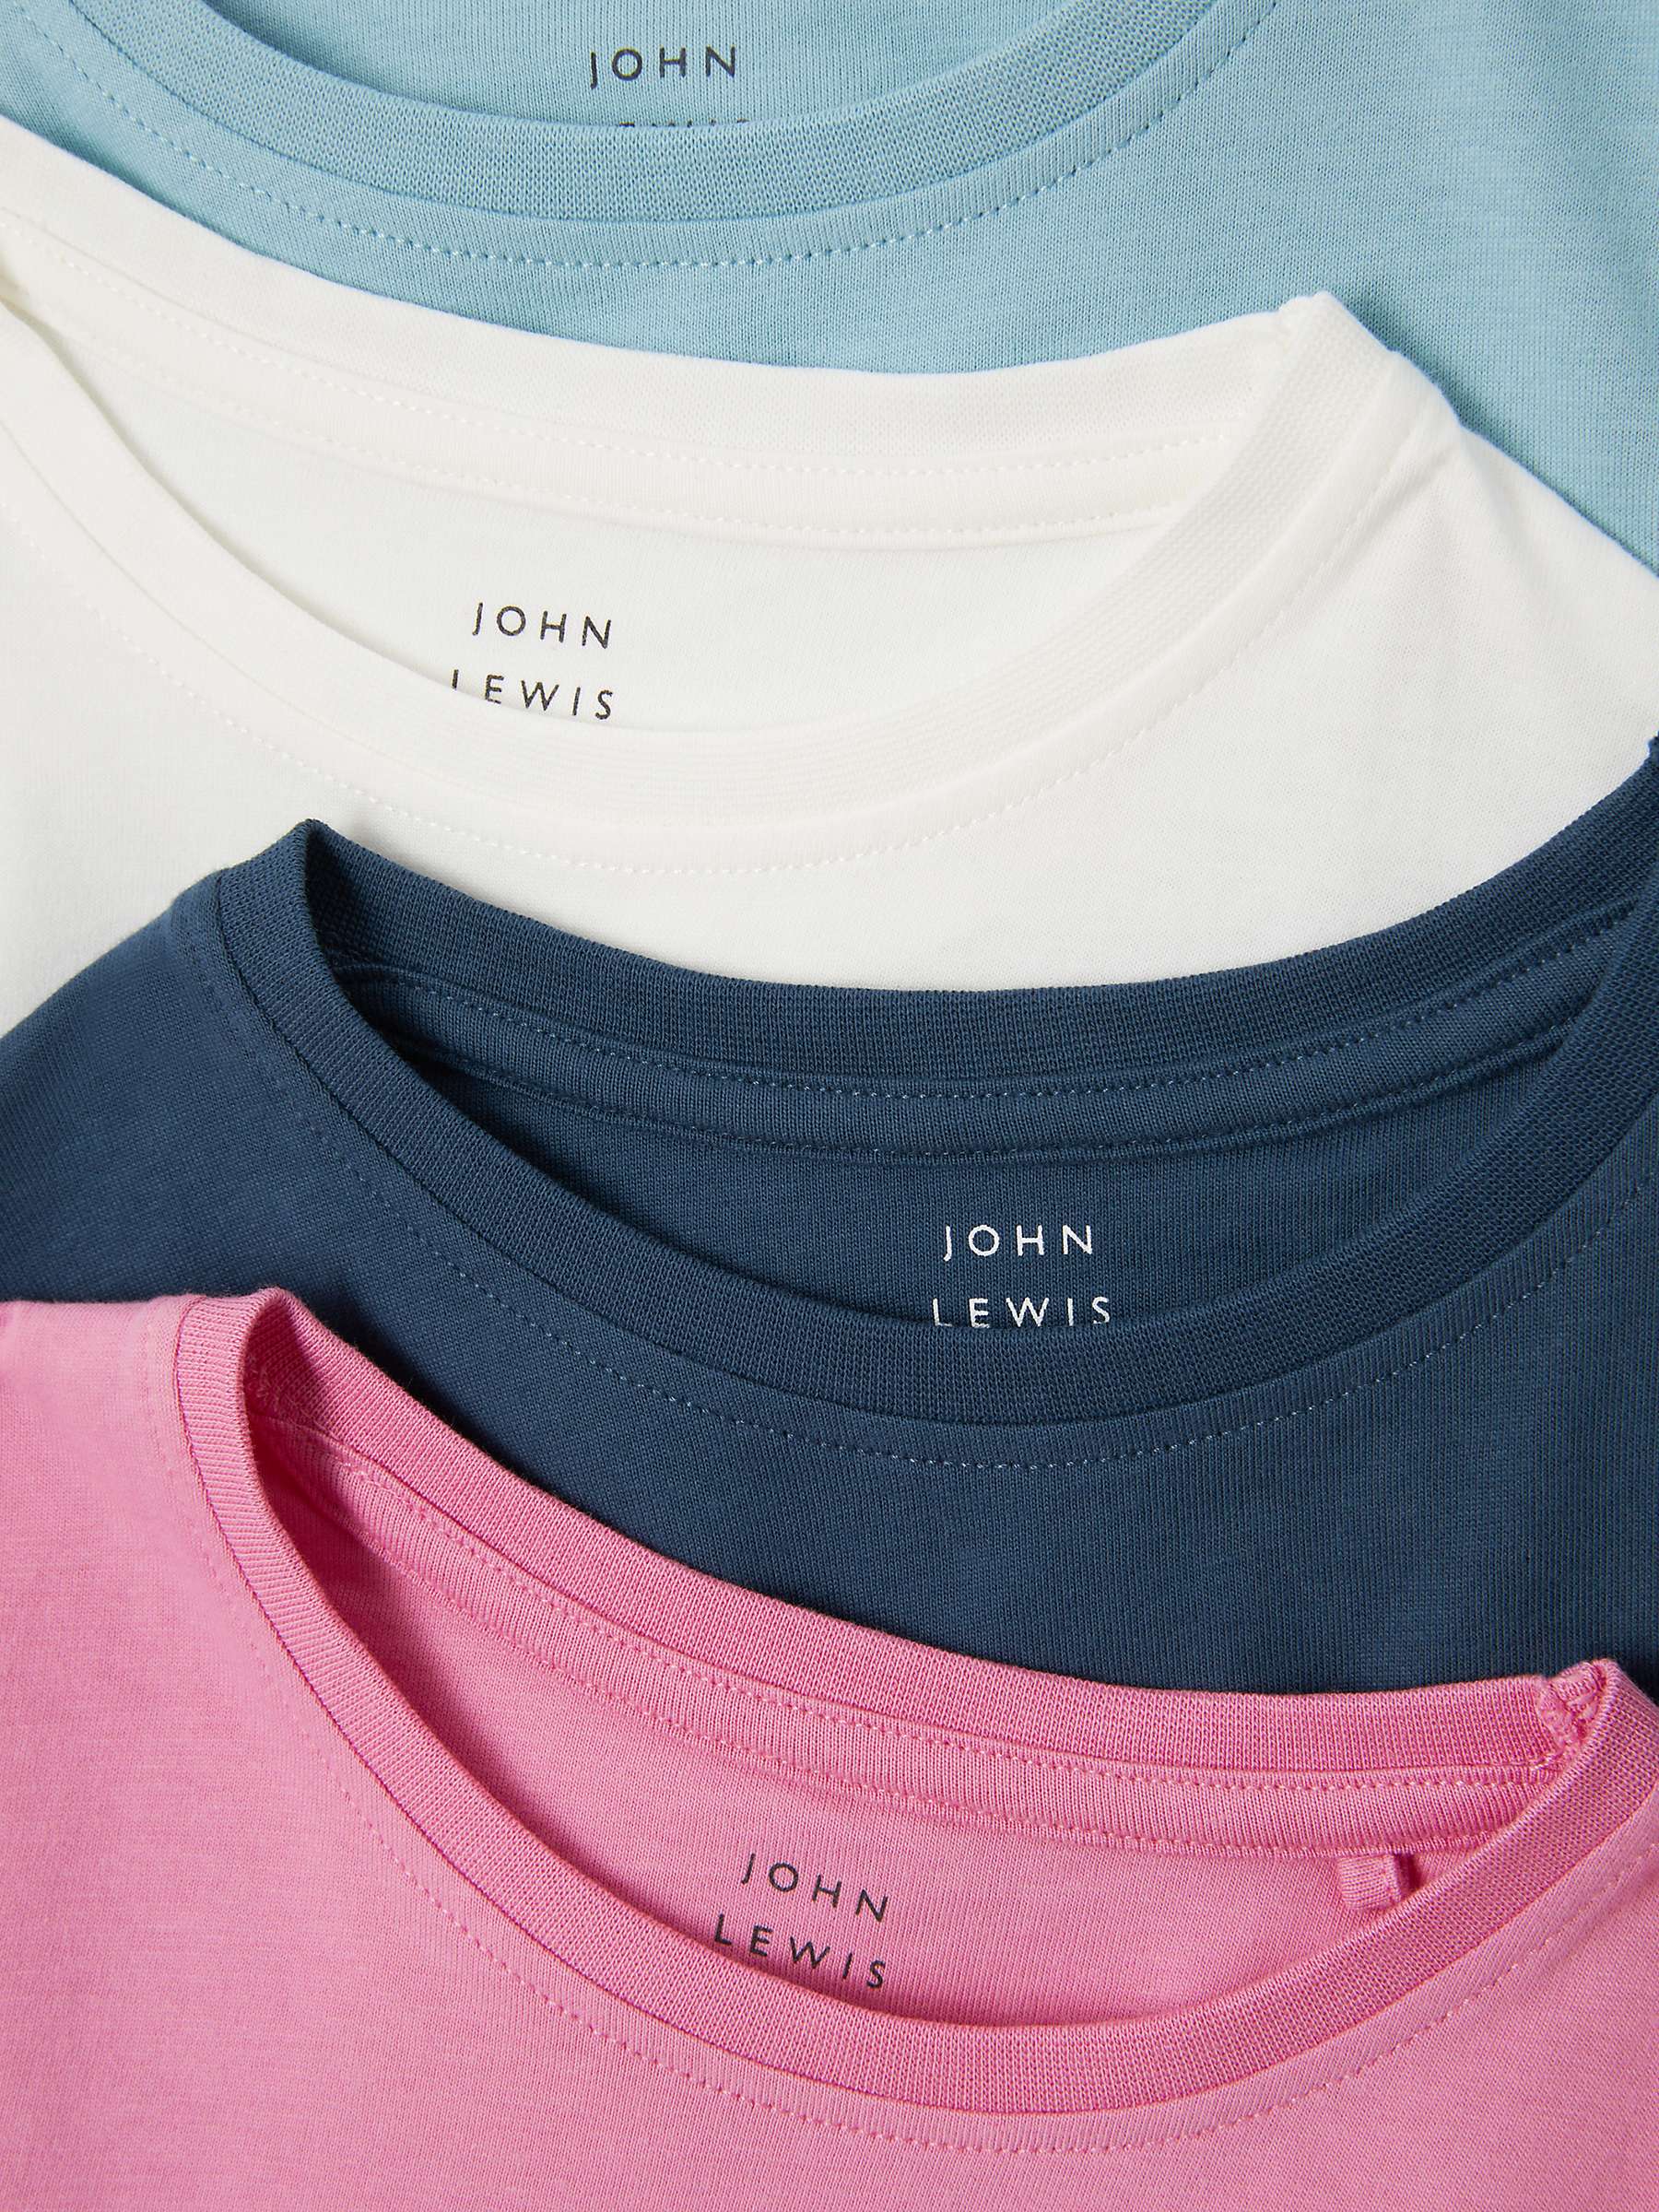 Buy John Lewis Kids' Plain Long Sleeve Cotton T-Shirt, Pack of 4, Multi Online at johnlewis.com